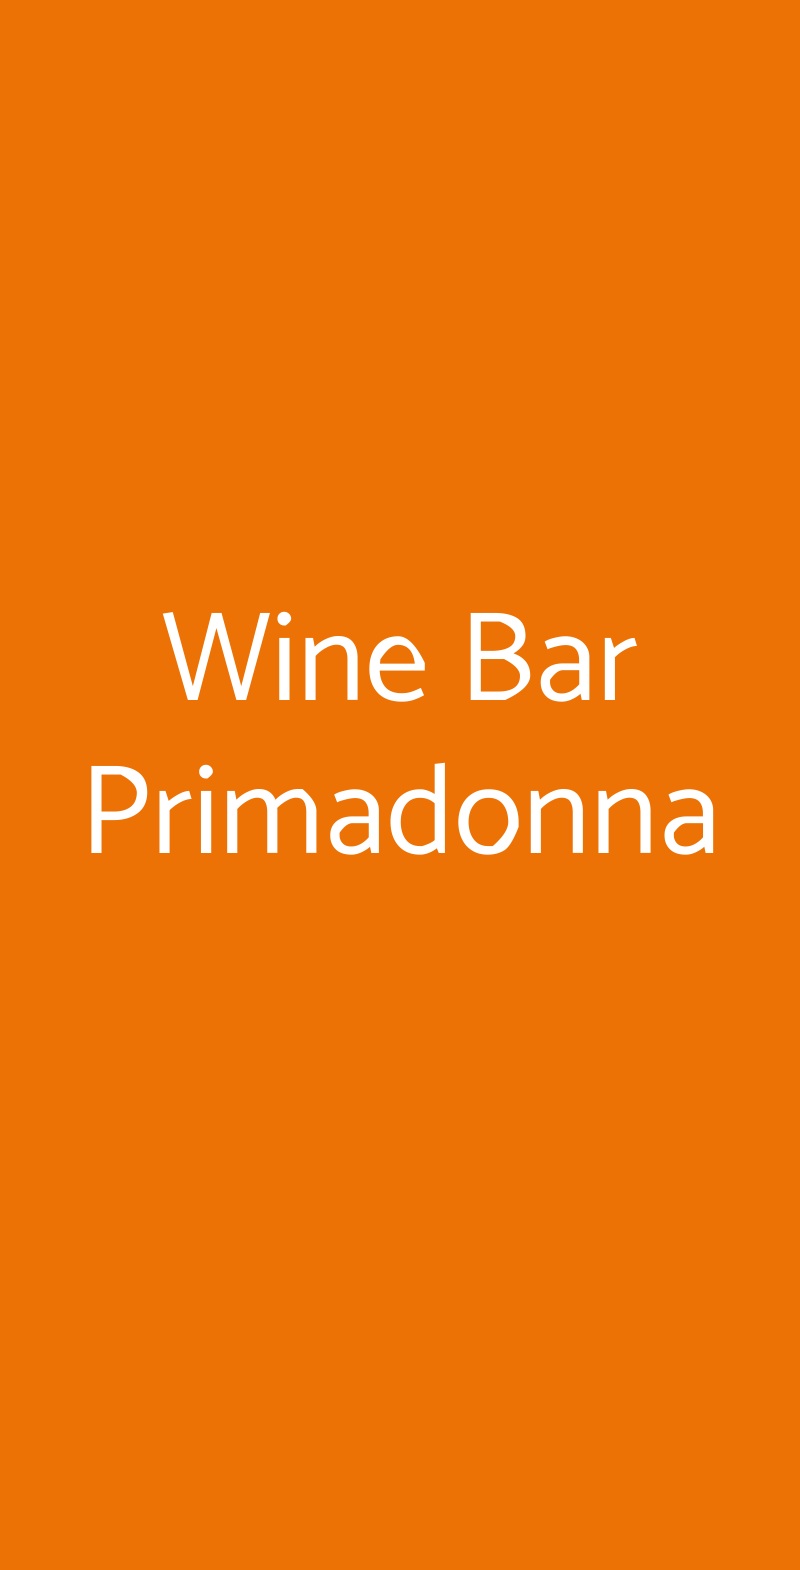 Wine Bar Primadonna Milano menù 1 pagina